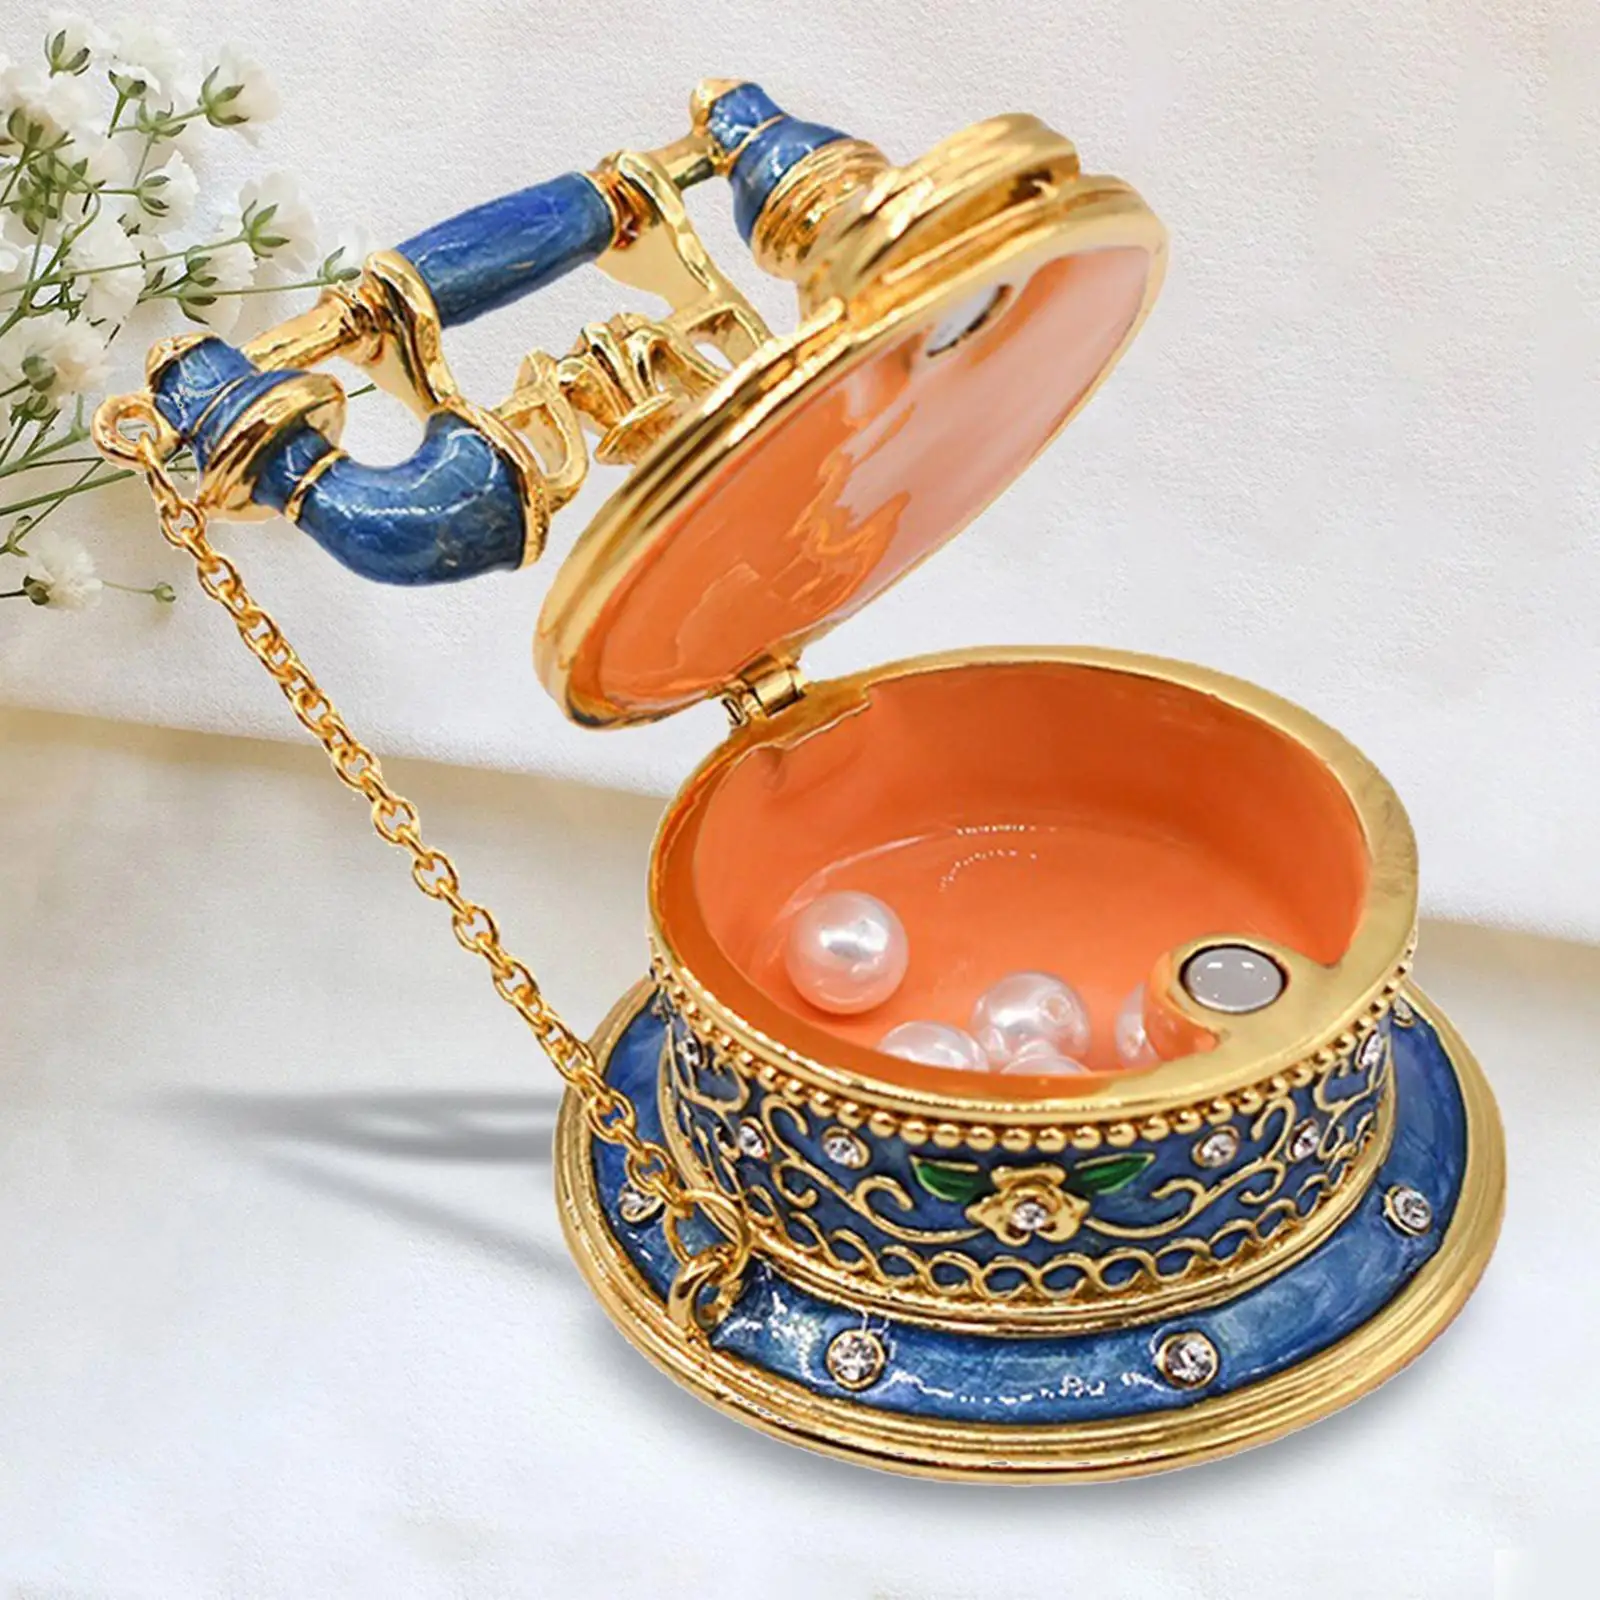 Vintage Telephone Jewelry Box Trinket Box Decoration Ornaments Enameled Home Decor Gift Treasure Chest for Ring Holder Bracelet